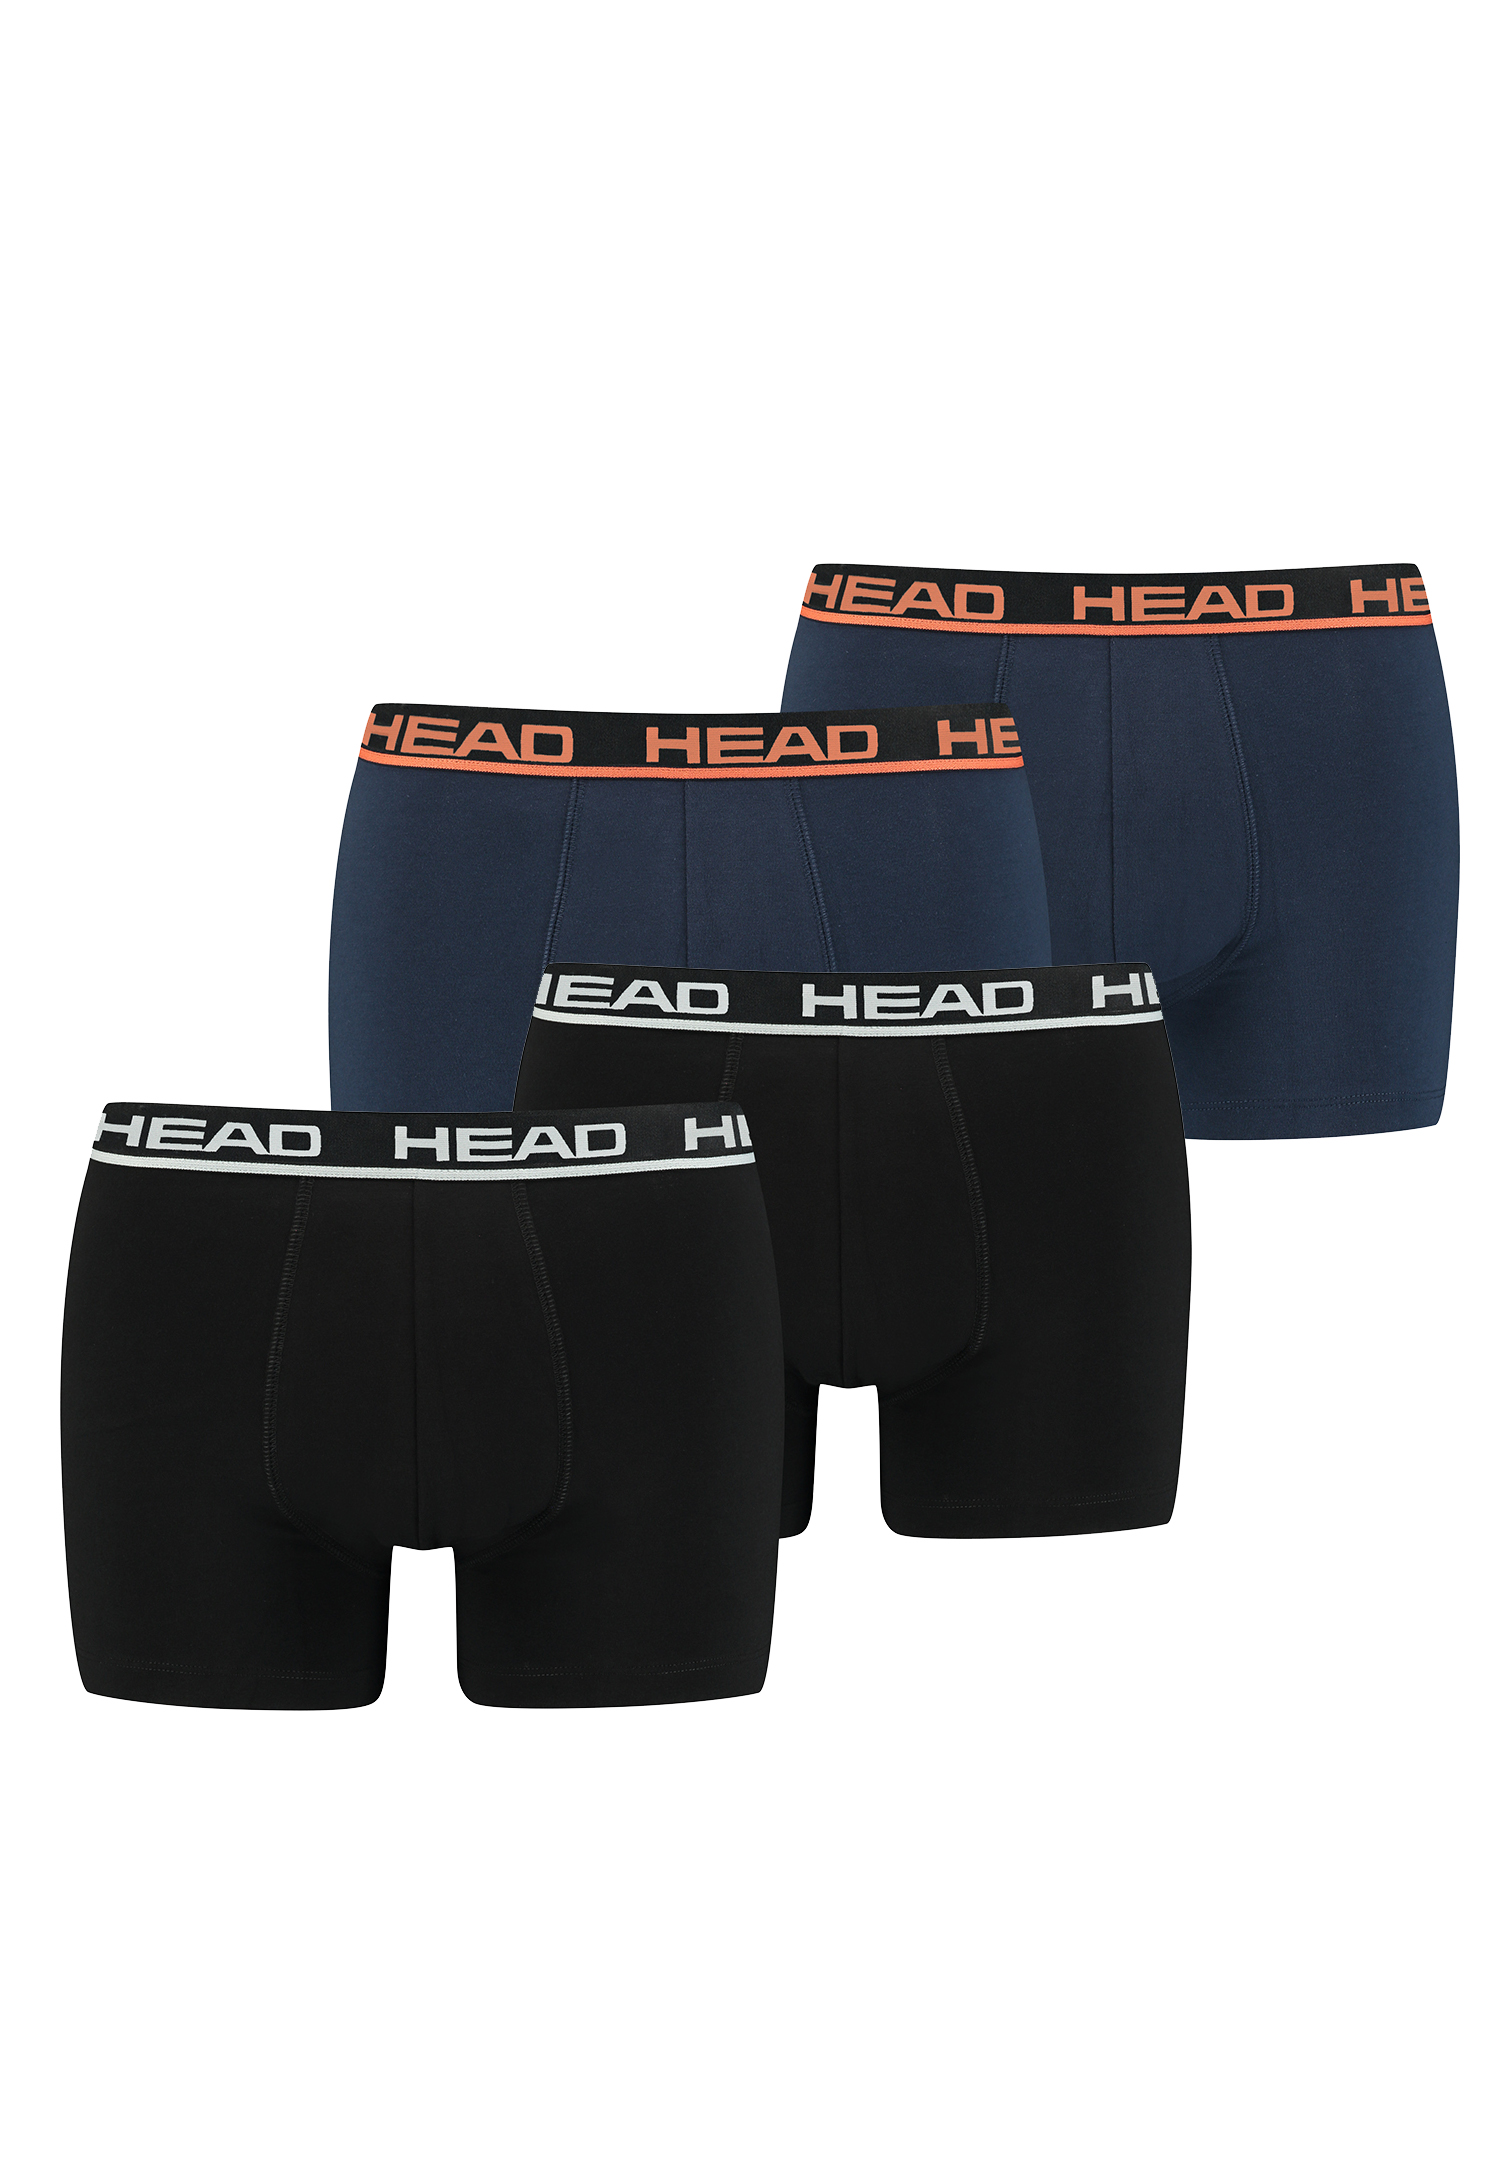 HEAD Herren Boxershorts Unterhosen 4P (Black/Blue Orange, XL)